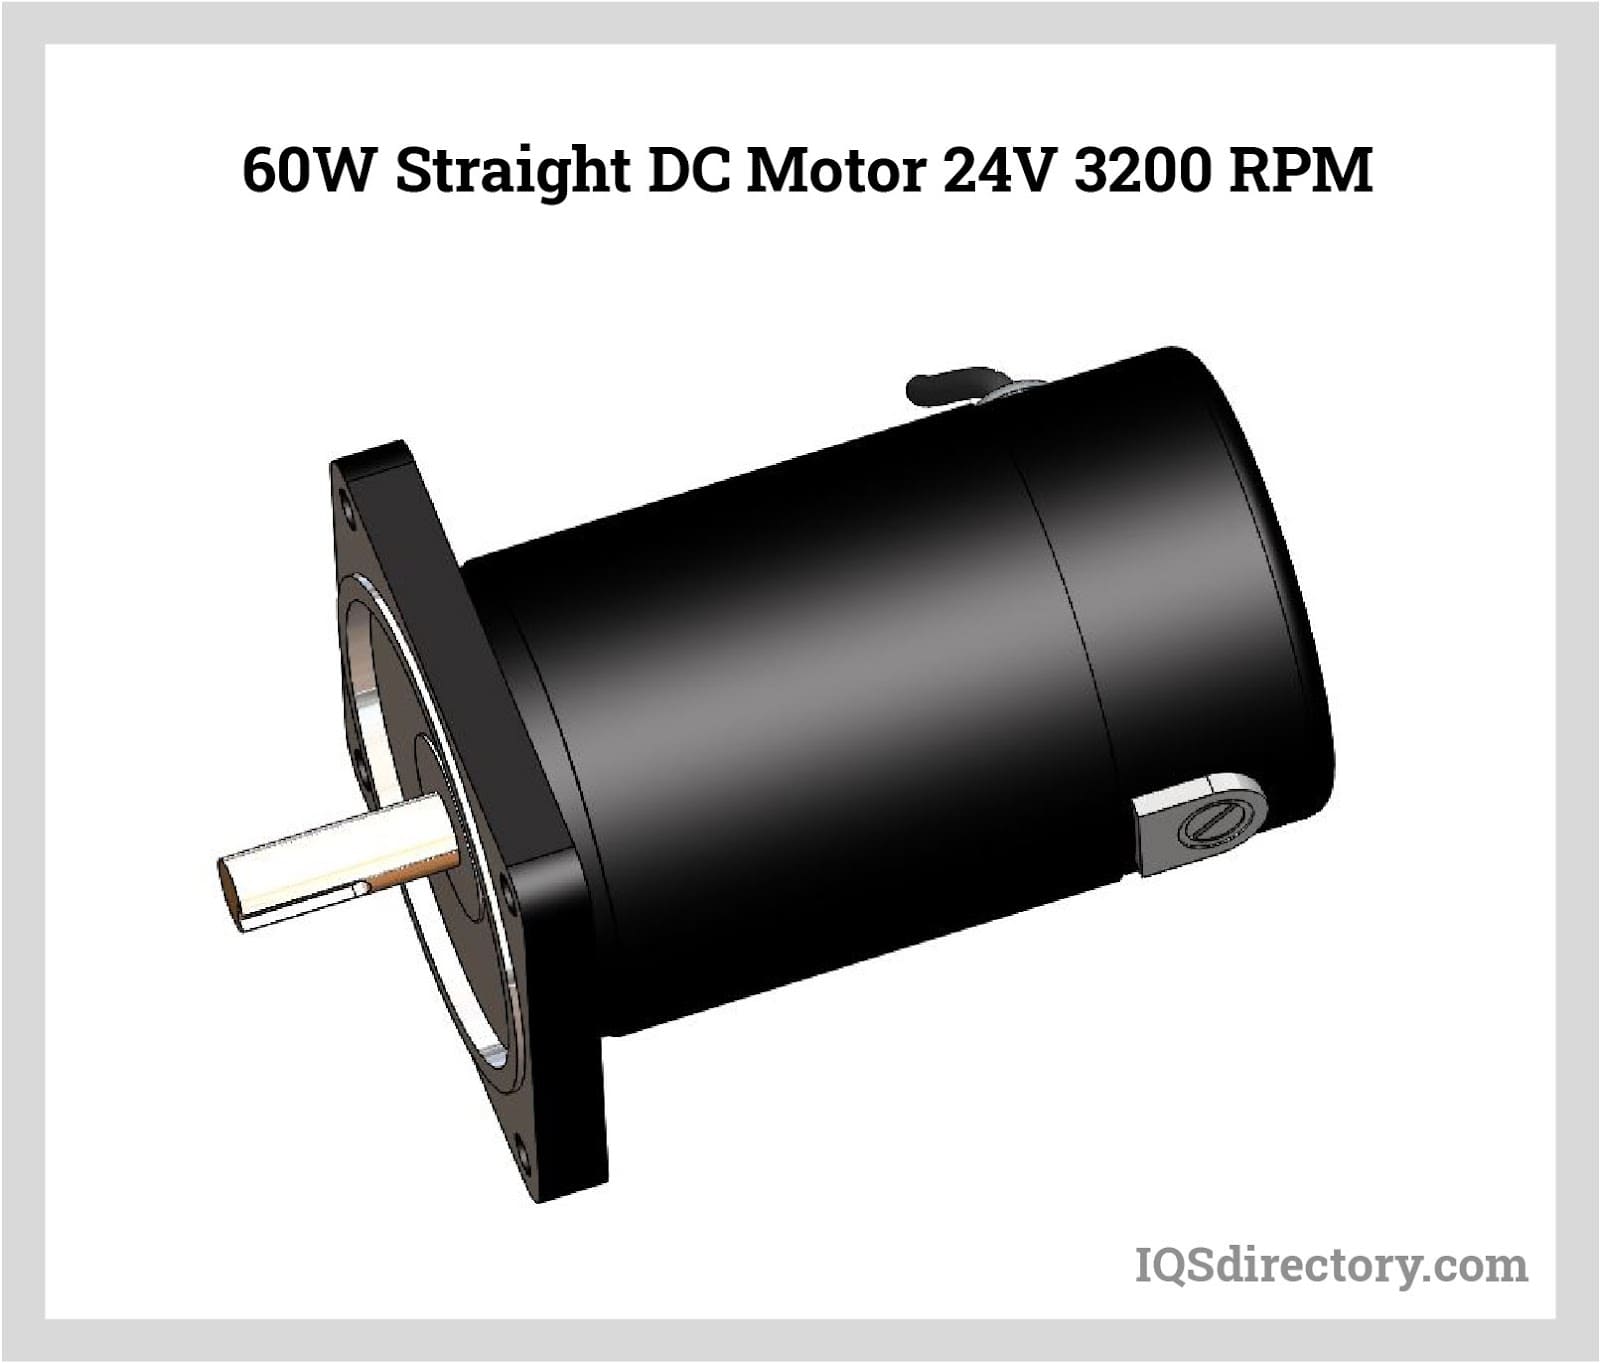 60W Straight DC Motor 24V 3200 RPM